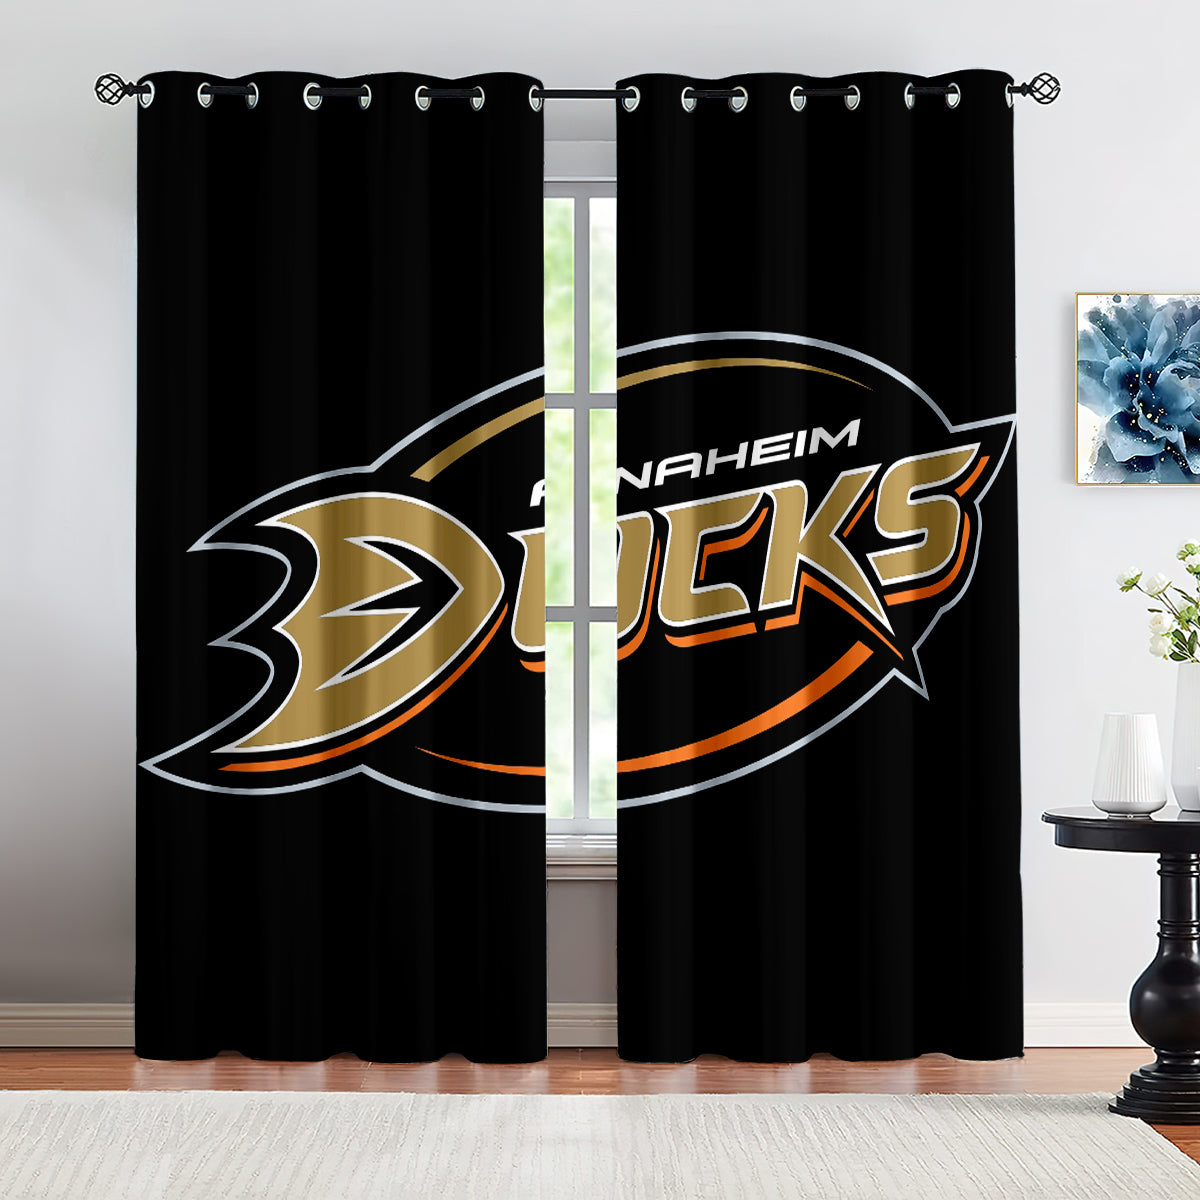 Anaheim Ducks Hockey League Blackout Curtains Drapes For Window Treatment Set